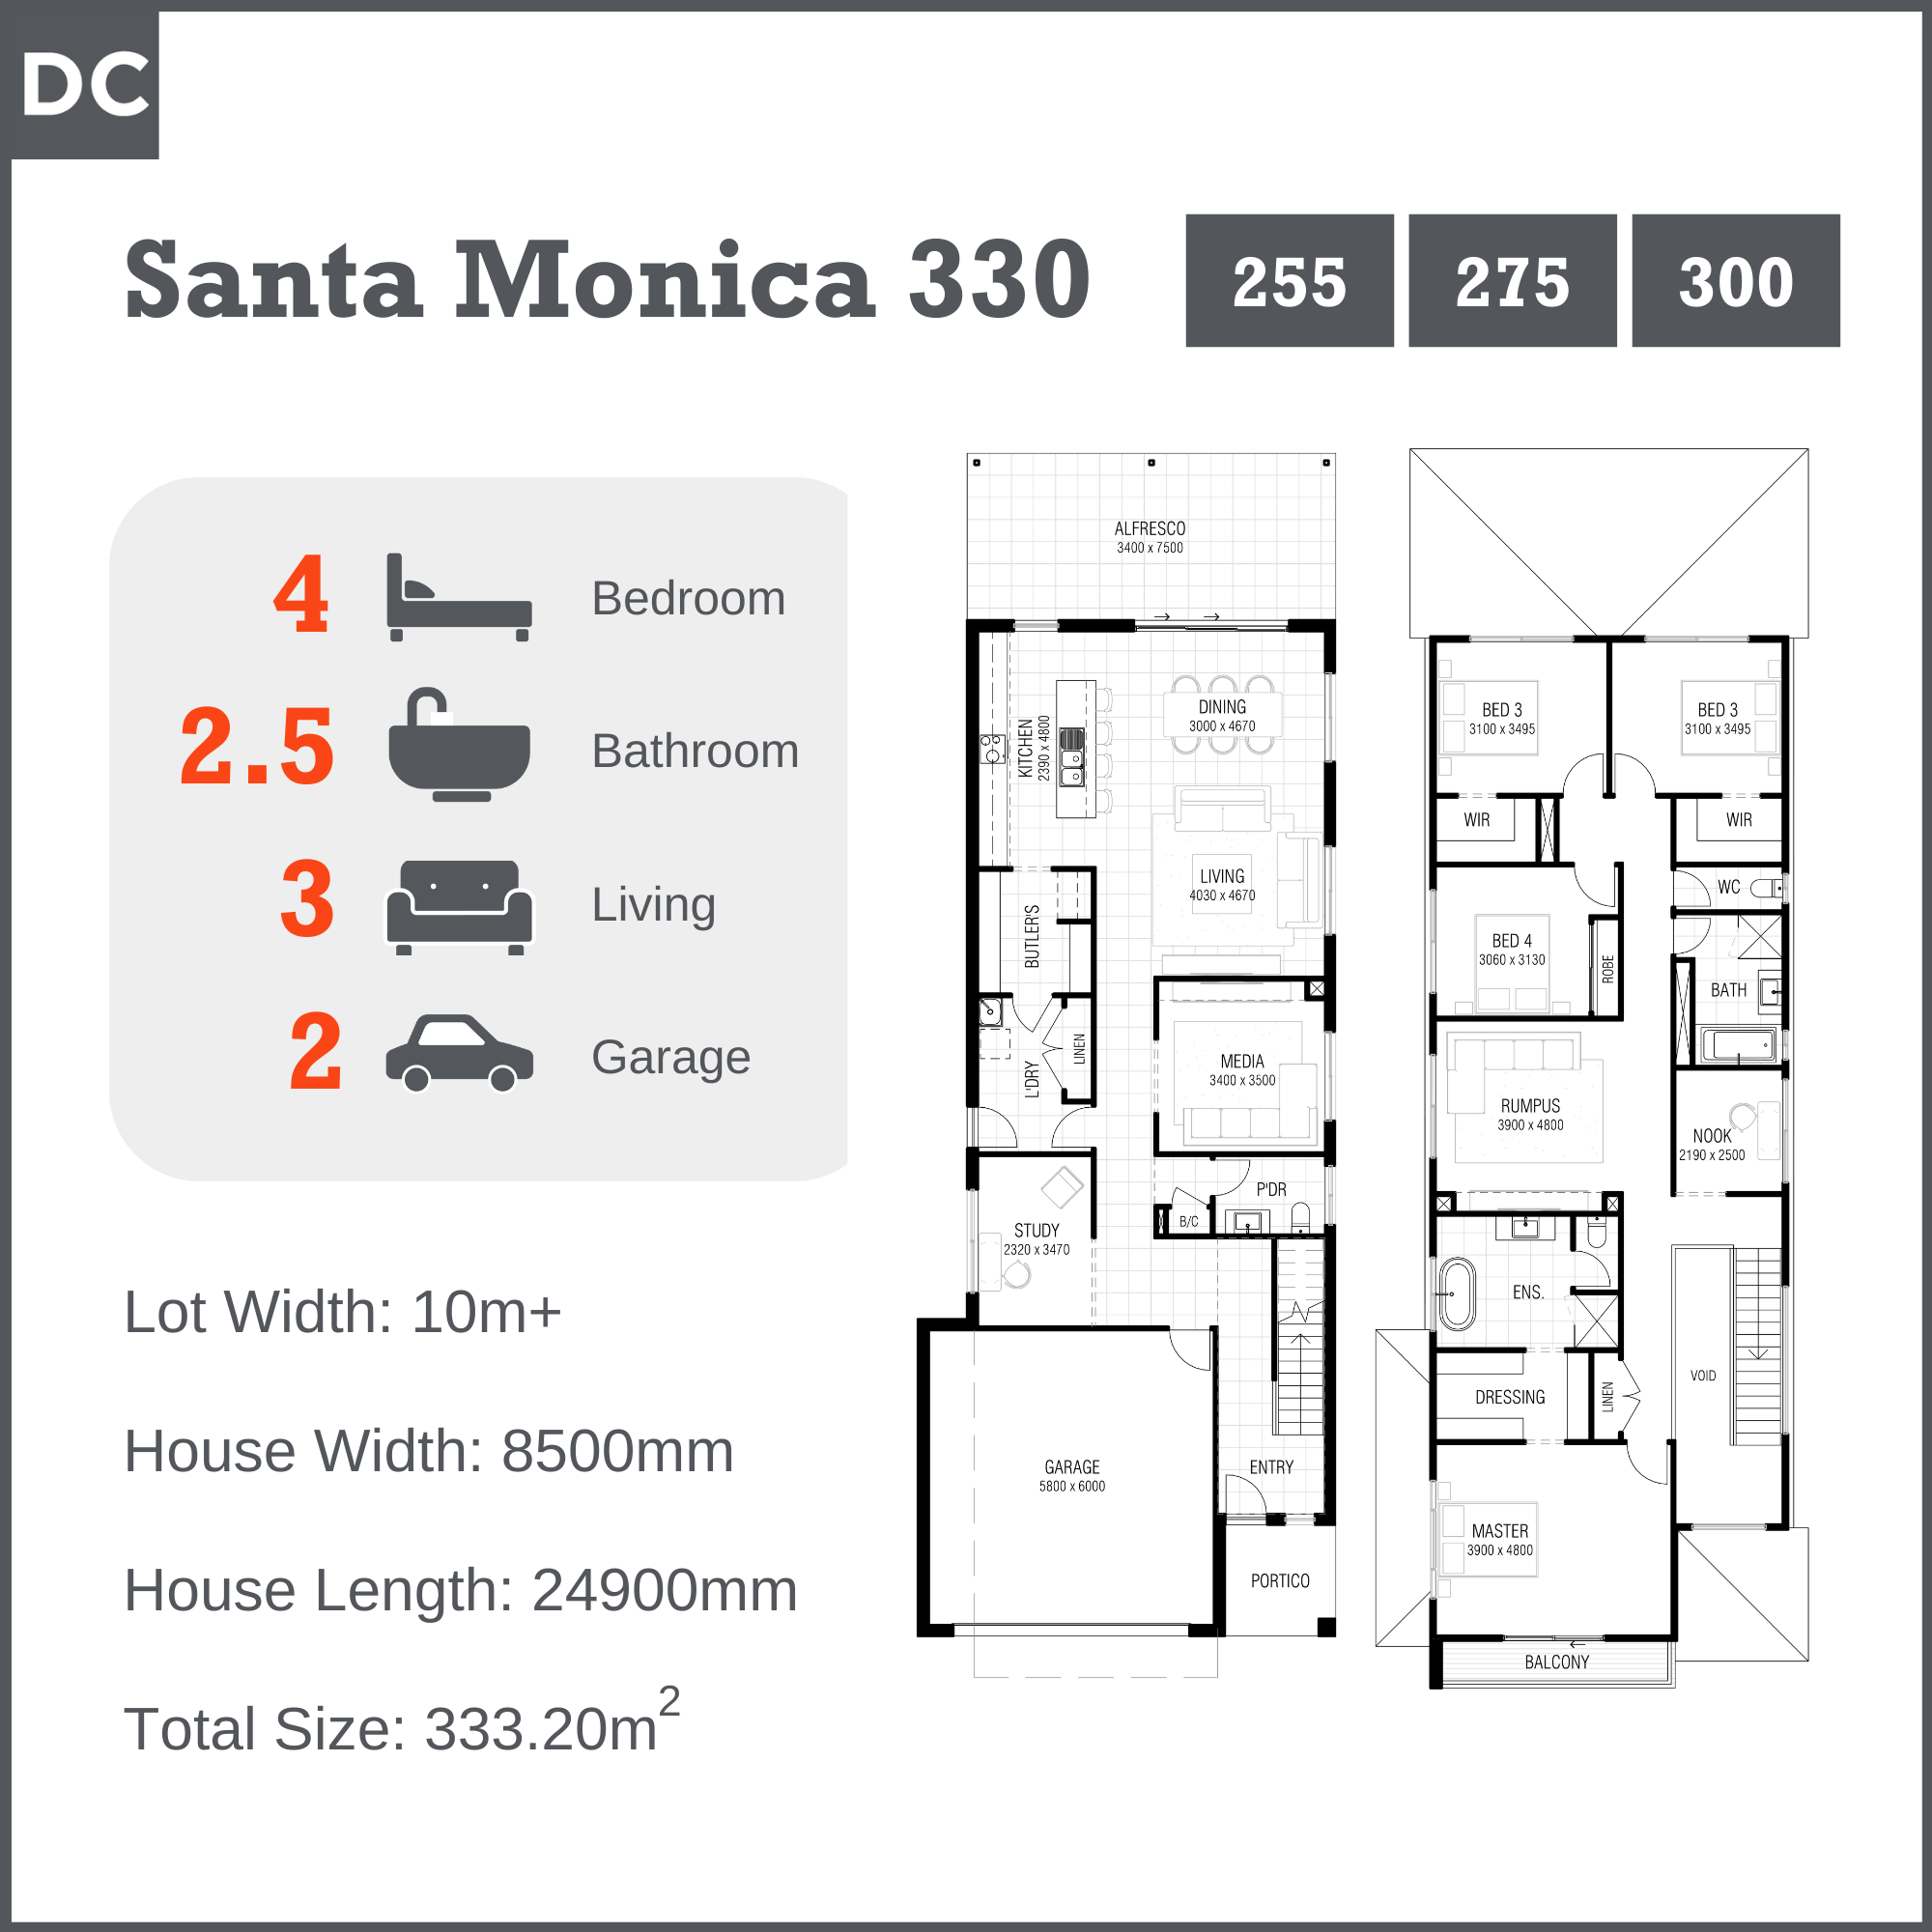 Santa Monica 330 Home Design - DC Living Range